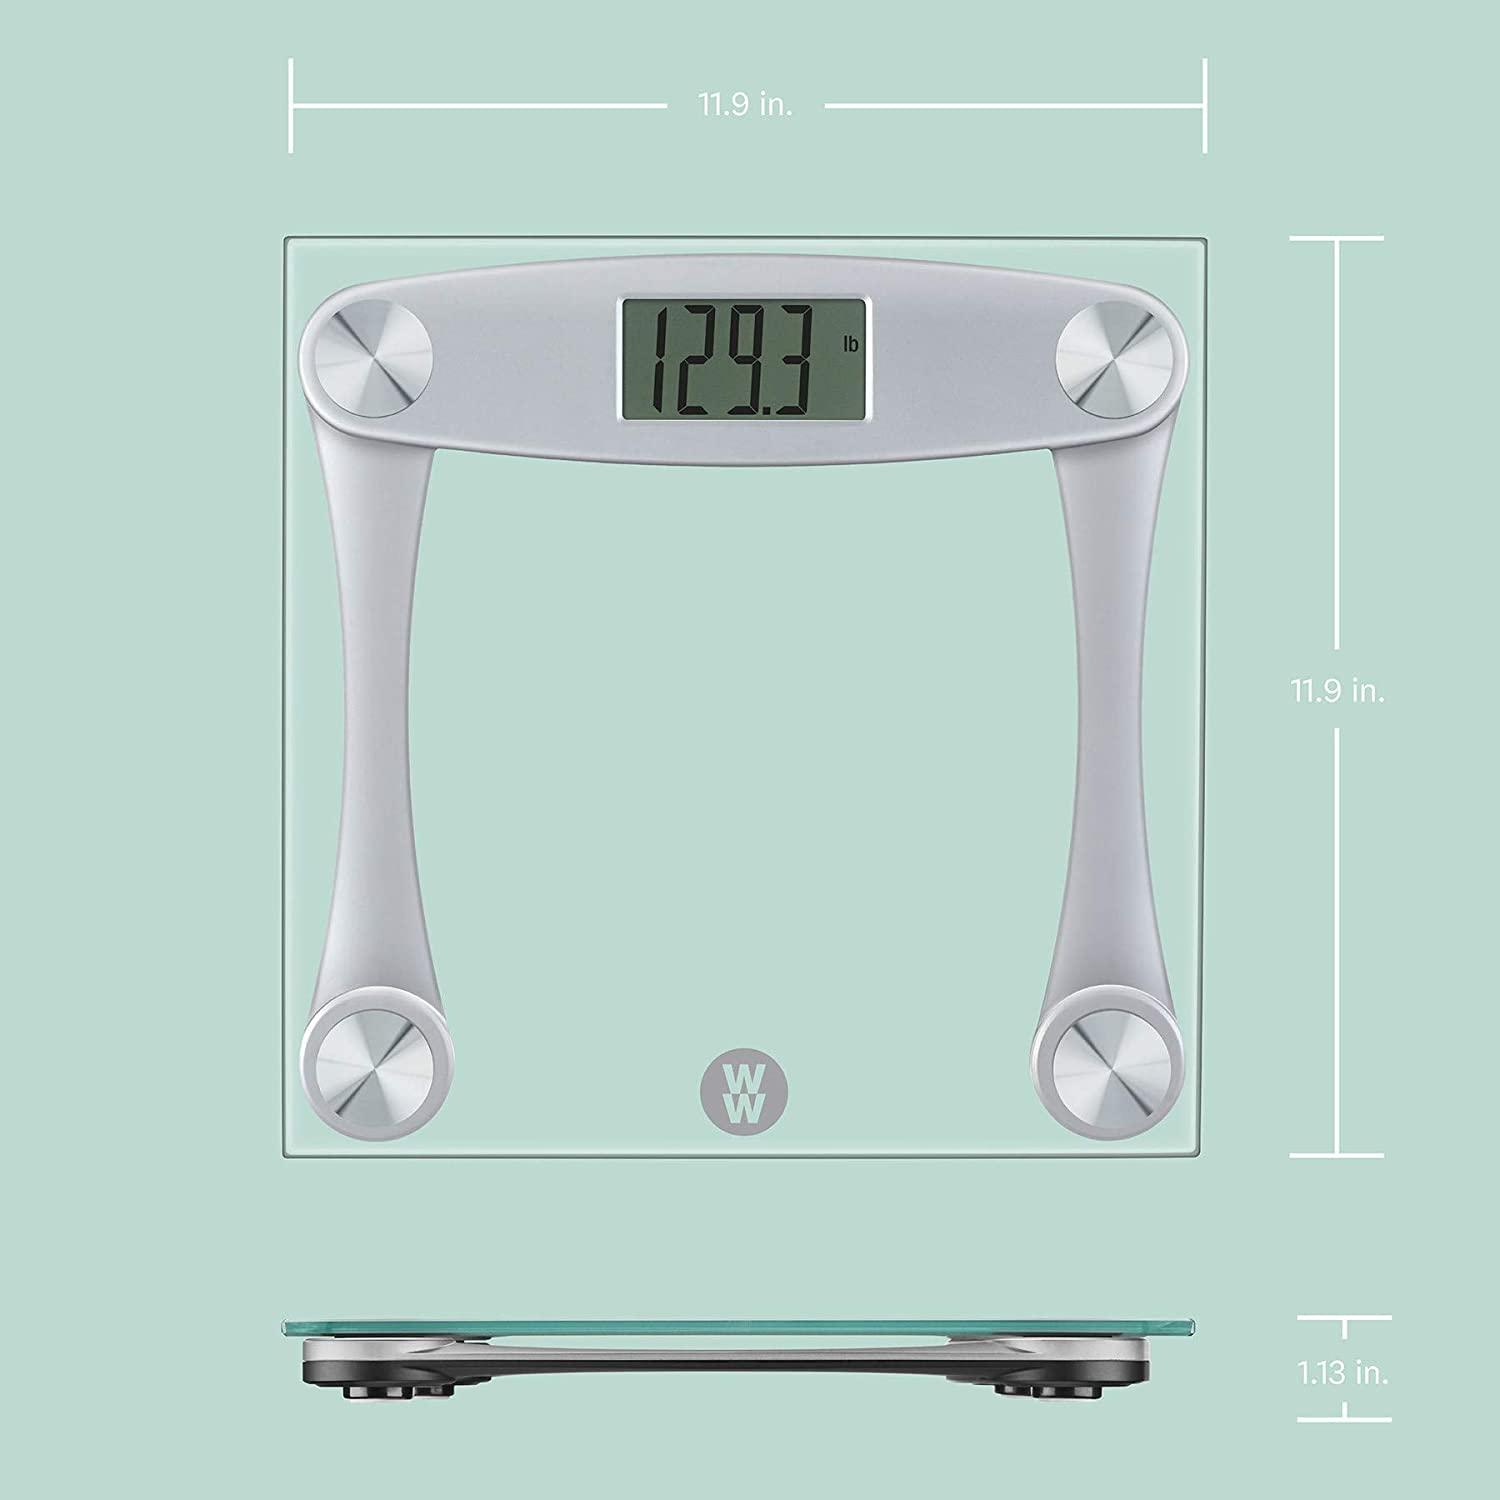 WW Scales by Conair Digital Glass Bathroom Scale 400 Lbs. Capacity